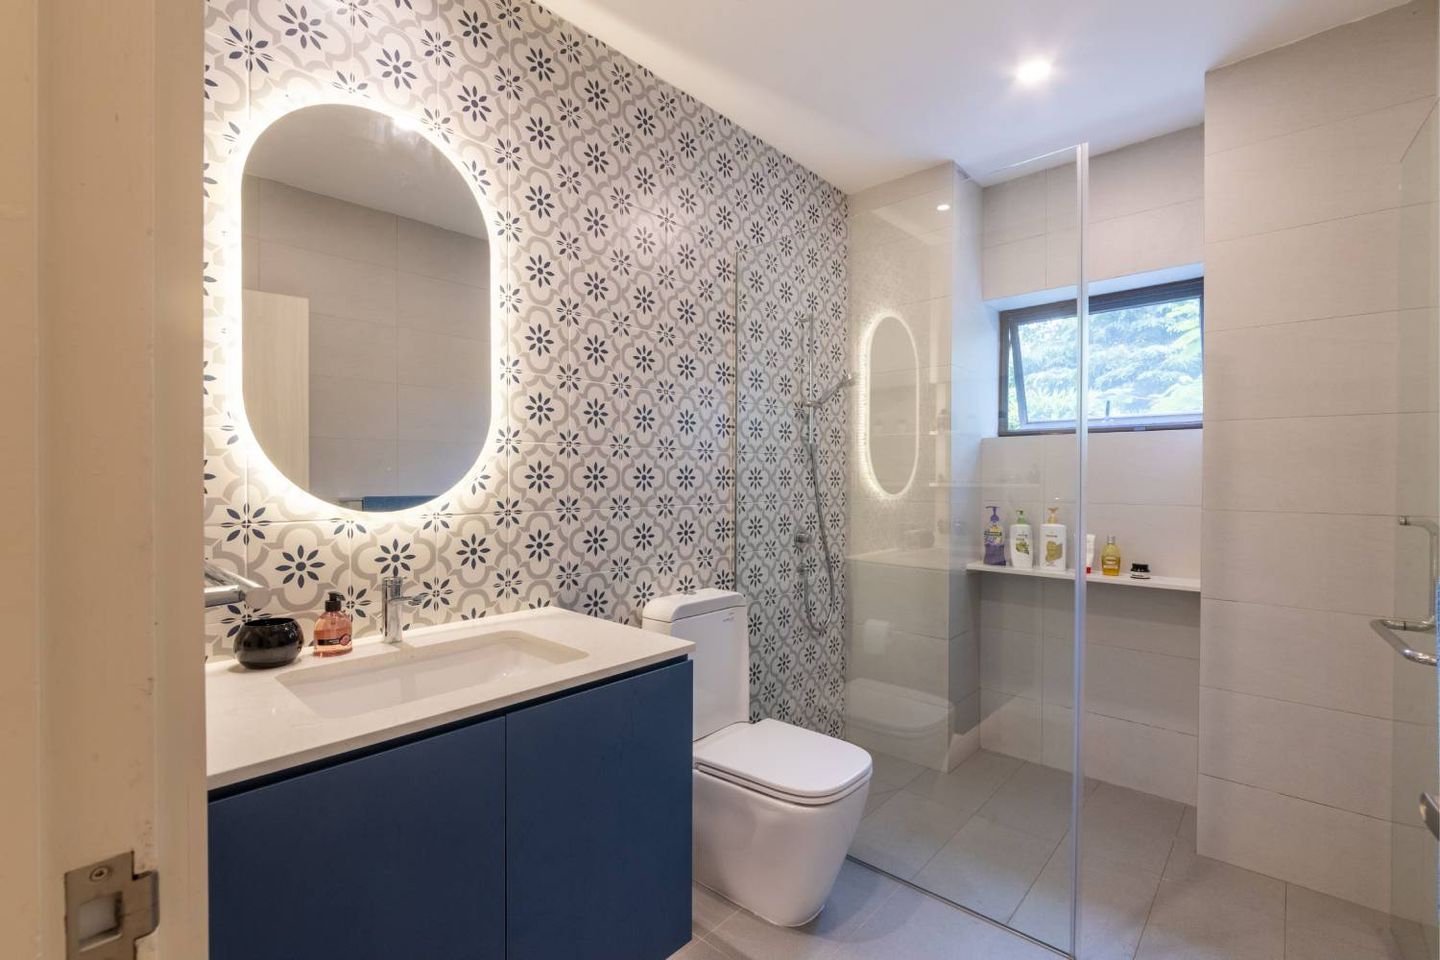 Light Grey Bathroom Design With Oval Mirror - Livspace